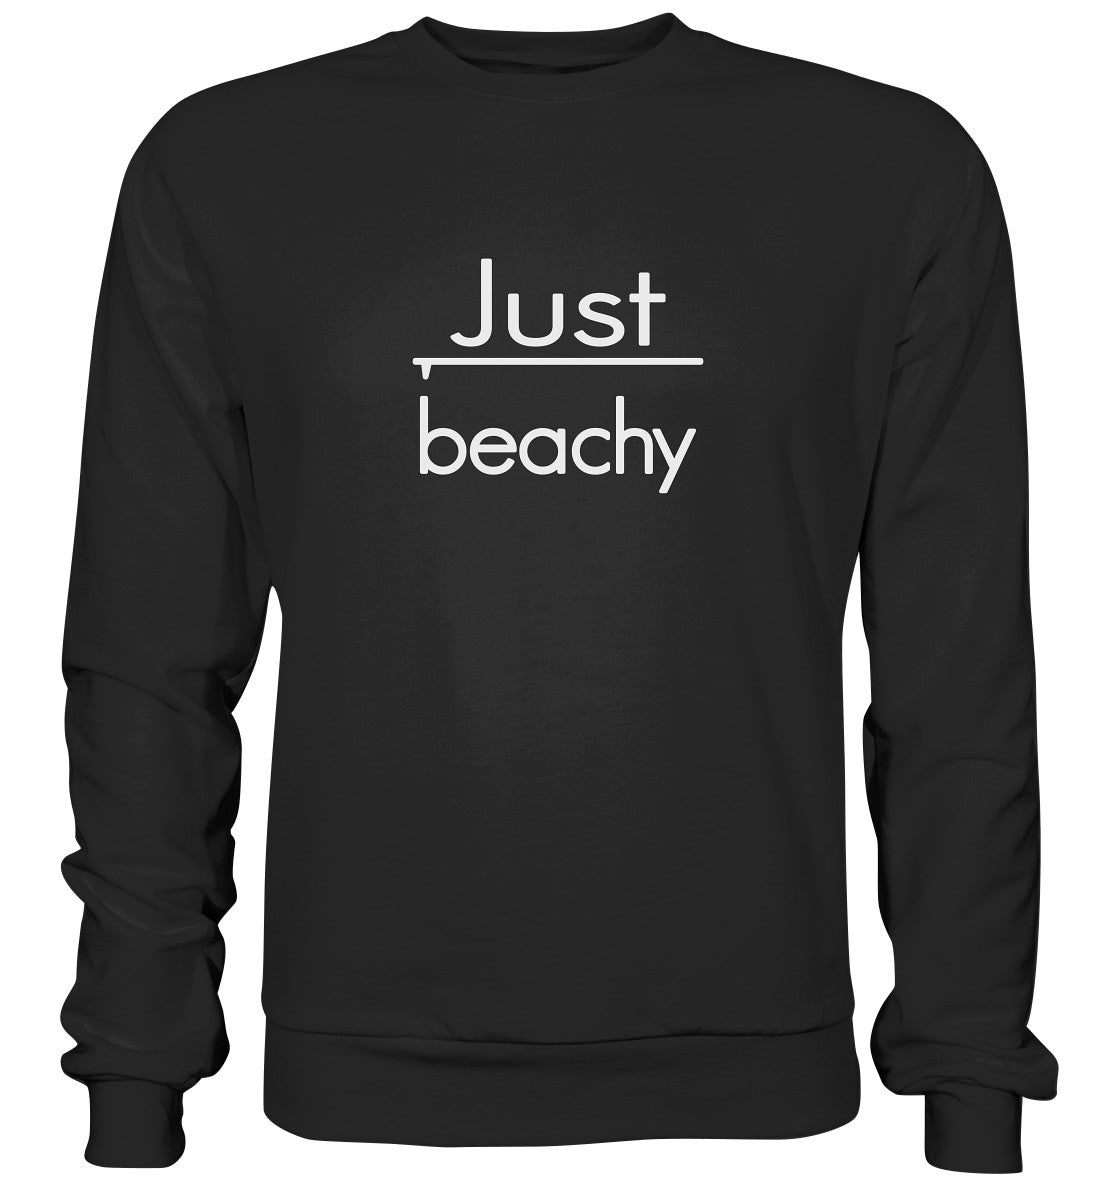 Boardtime-Just beachy - Basic Sweatshirt